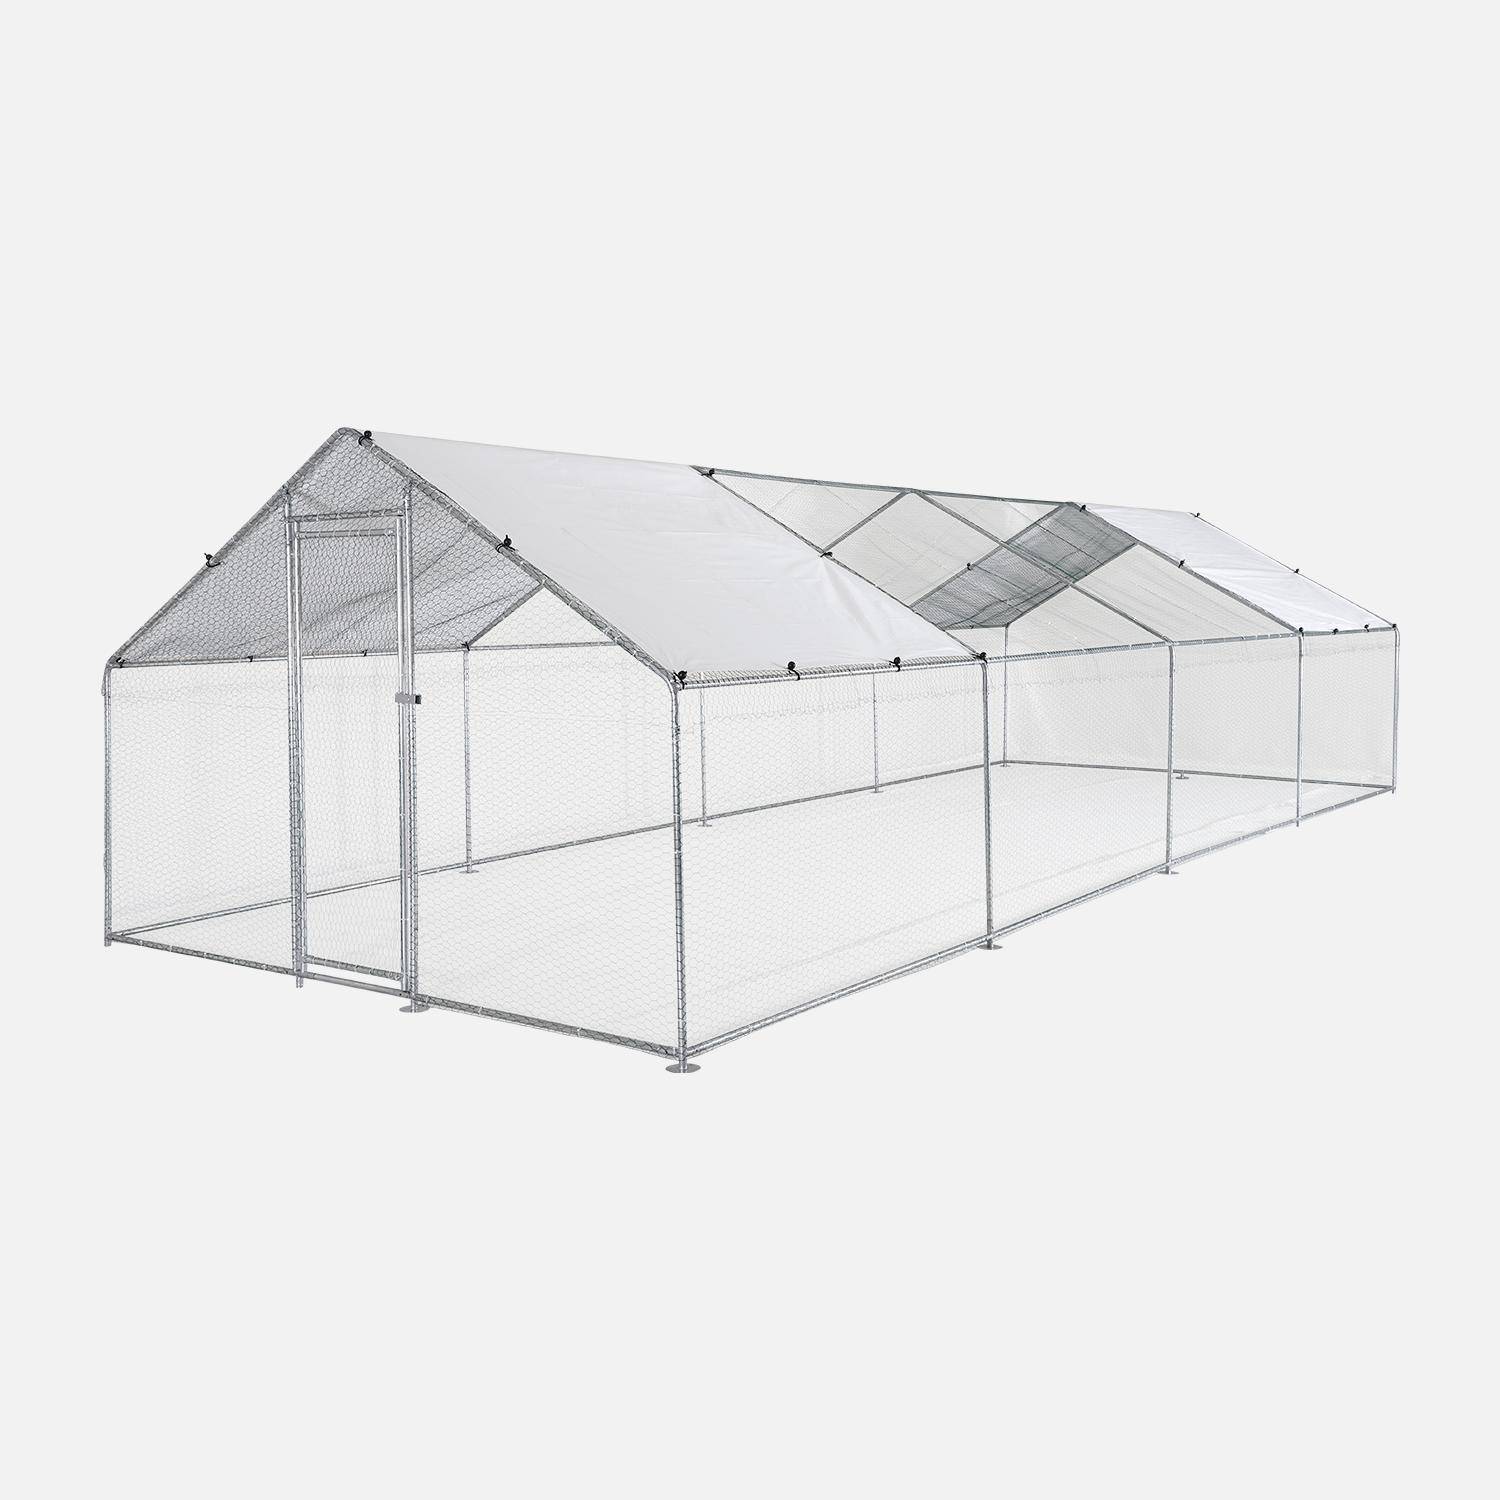 Kippenverblijf 24m² - Babette - gegalvaniseerd staal, waterdicht en UV-bestendig dak, deur met klink,sweeek,Photo1